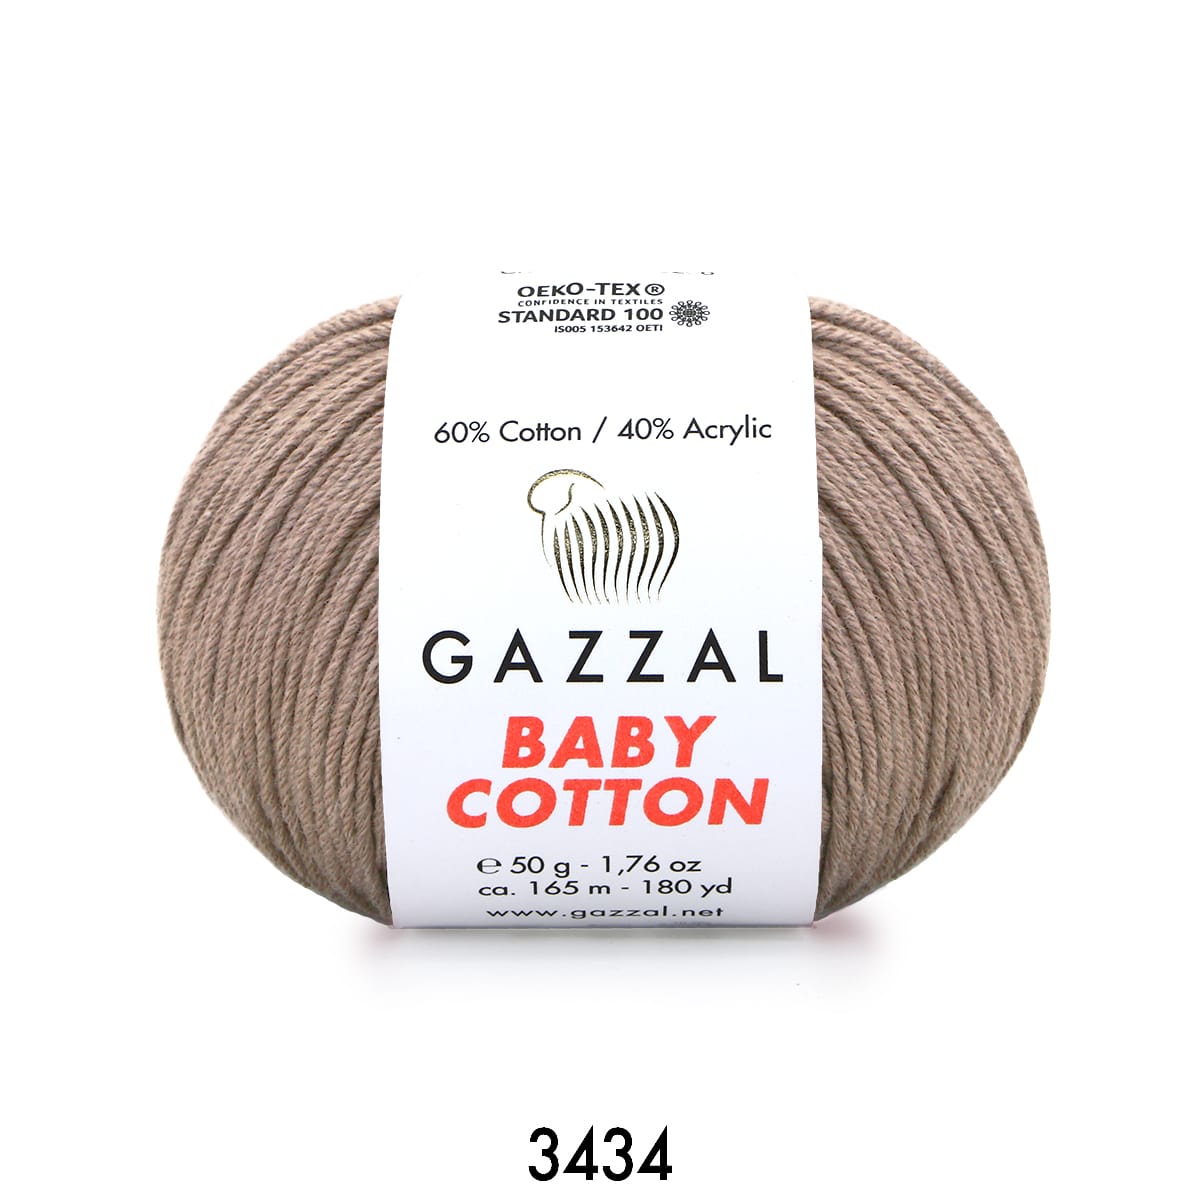 Gazzal Baby Cotton 3434